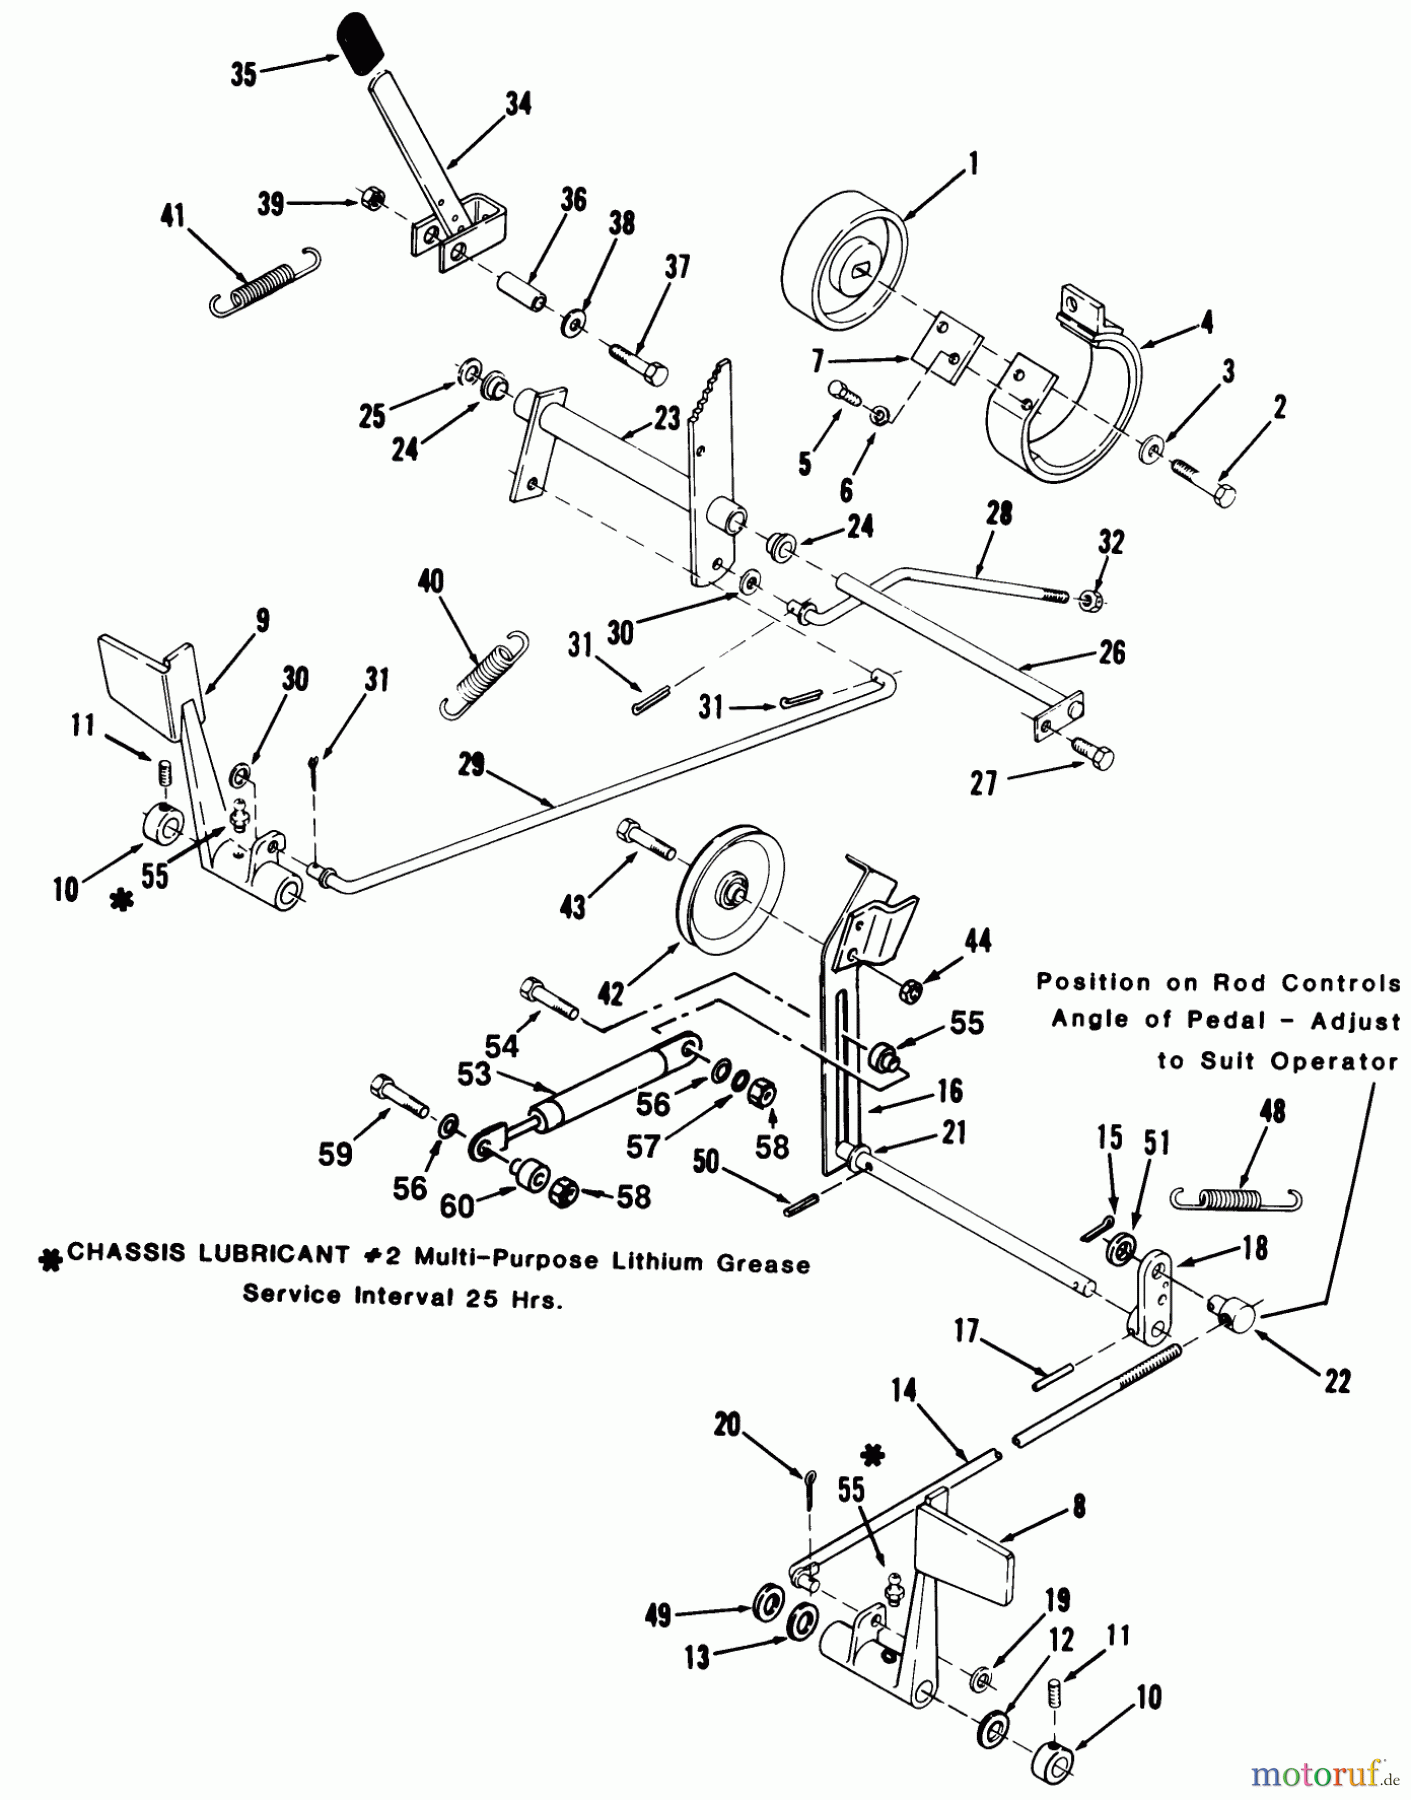  Toro Neu Mowers, Lawn & Garden Tractor Seite 1 31-16O803 (416-8) - Toro 416-8 Garden Tractor, 1991 (1000001-1999999) CLUTCH, BRAKE AND SPEED CONTROL LINKAGE